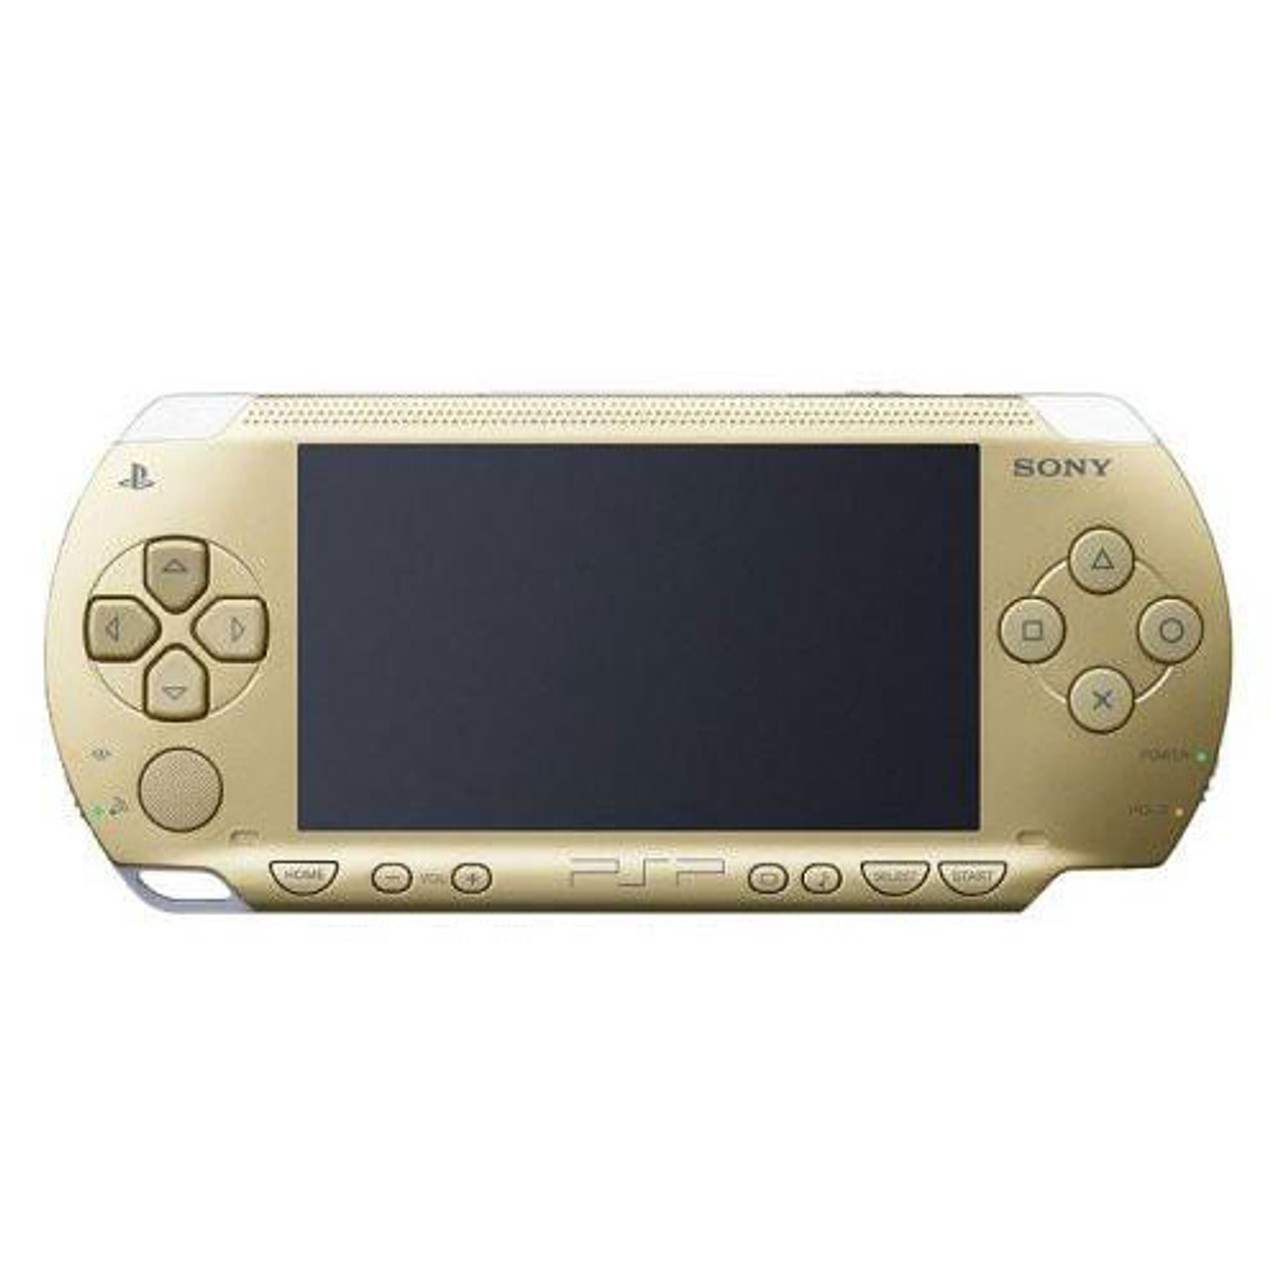 Consola Sony PSP 1000 Original PlayStation Color Blanco